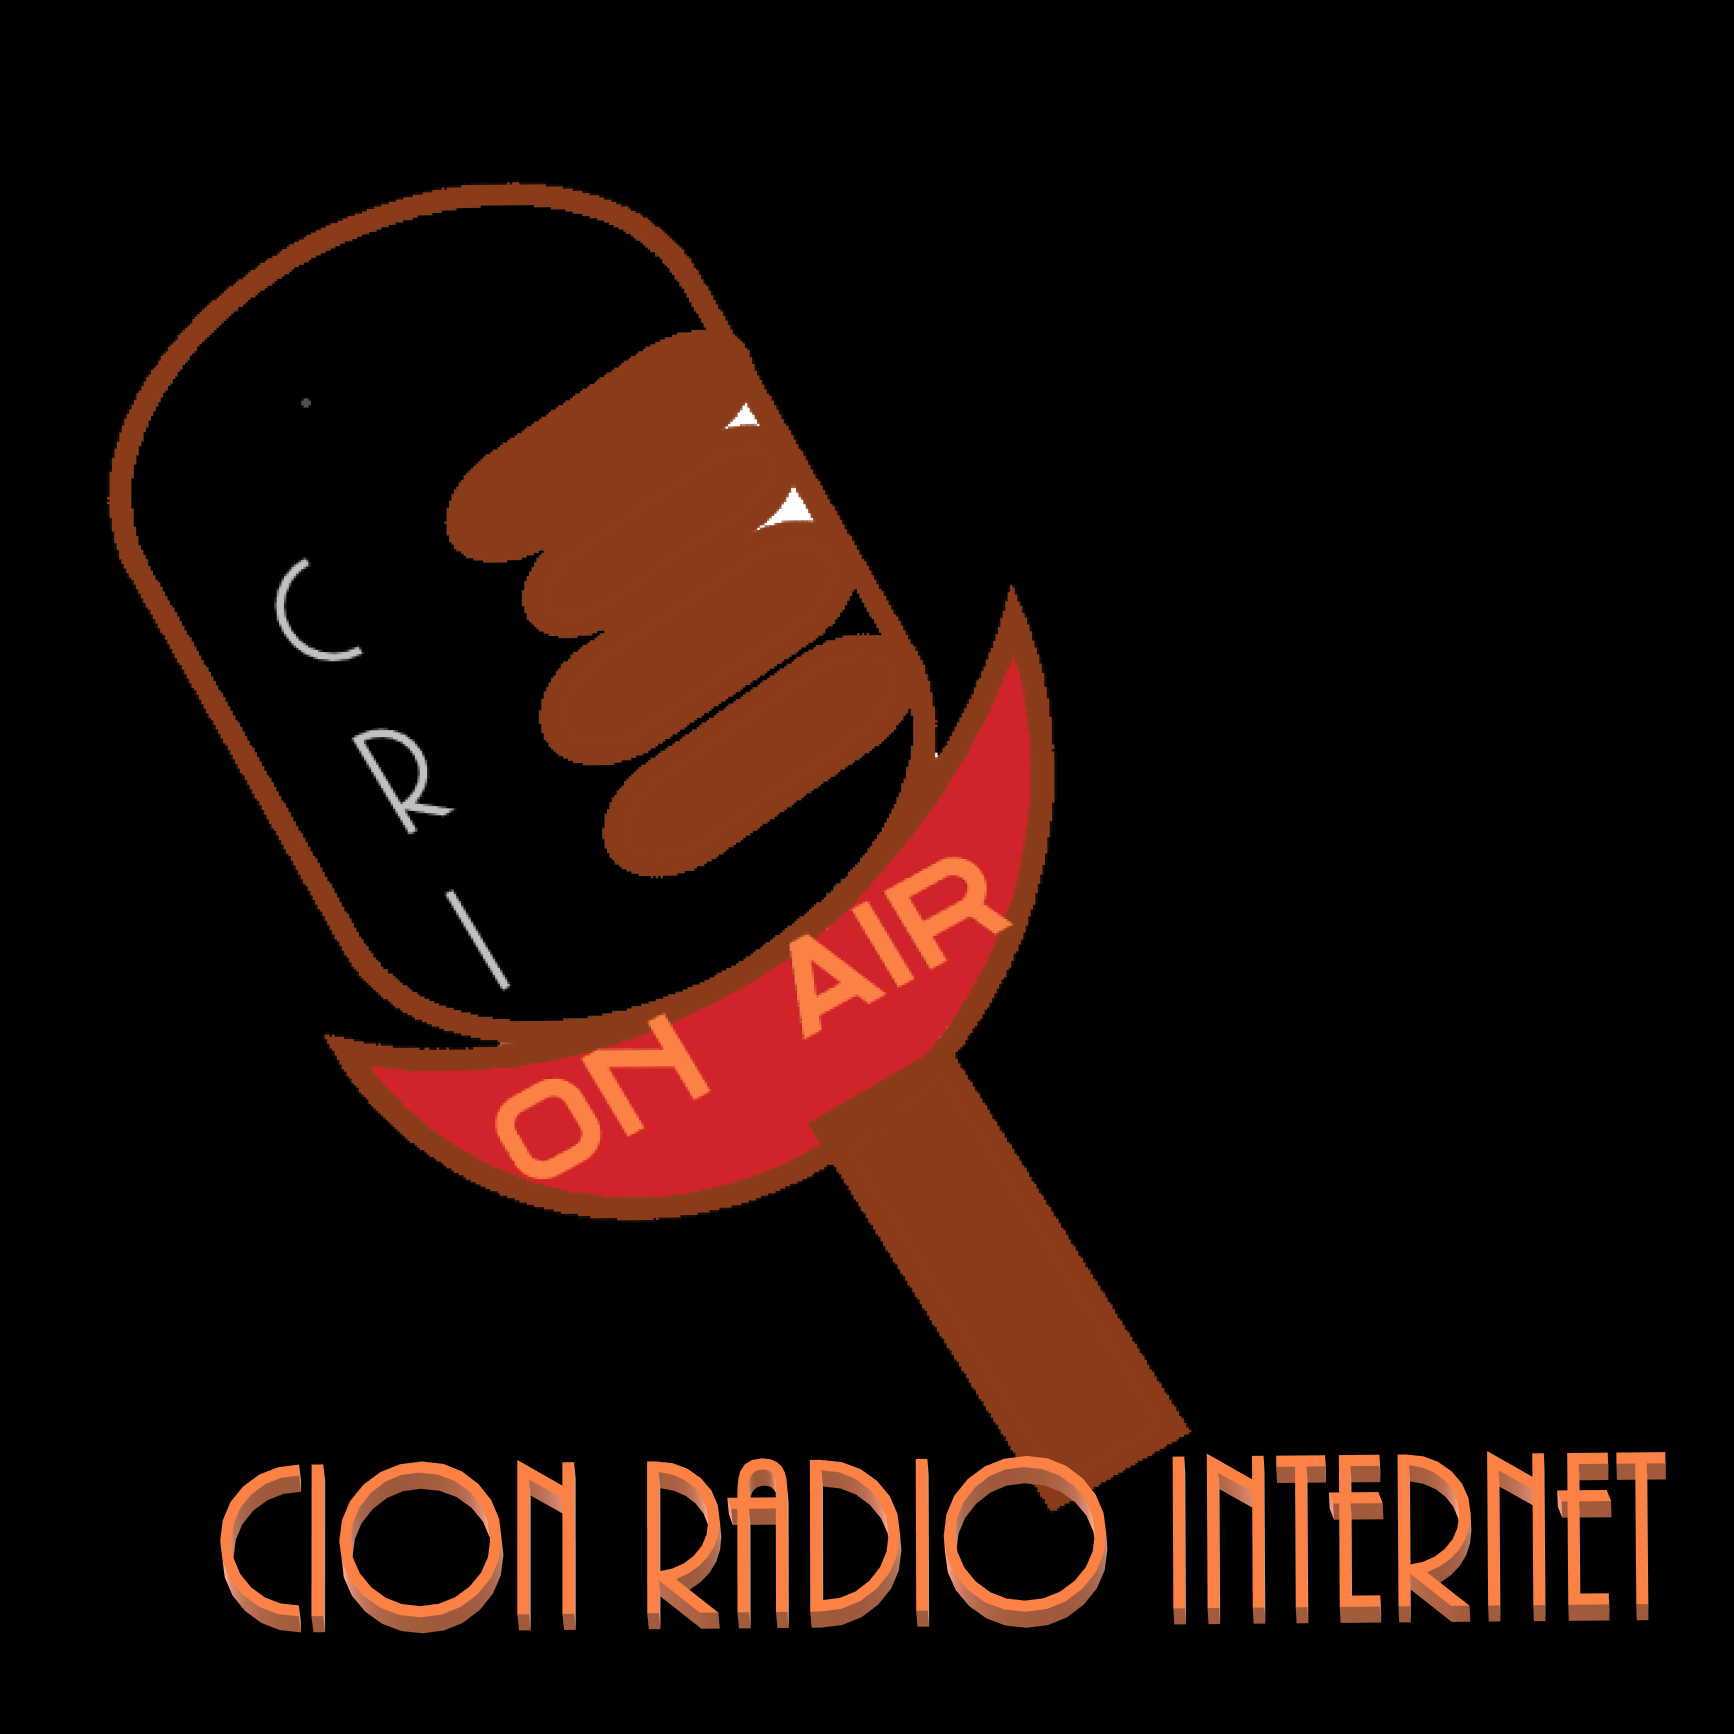 CRI (CION RADIO INC) RADIO